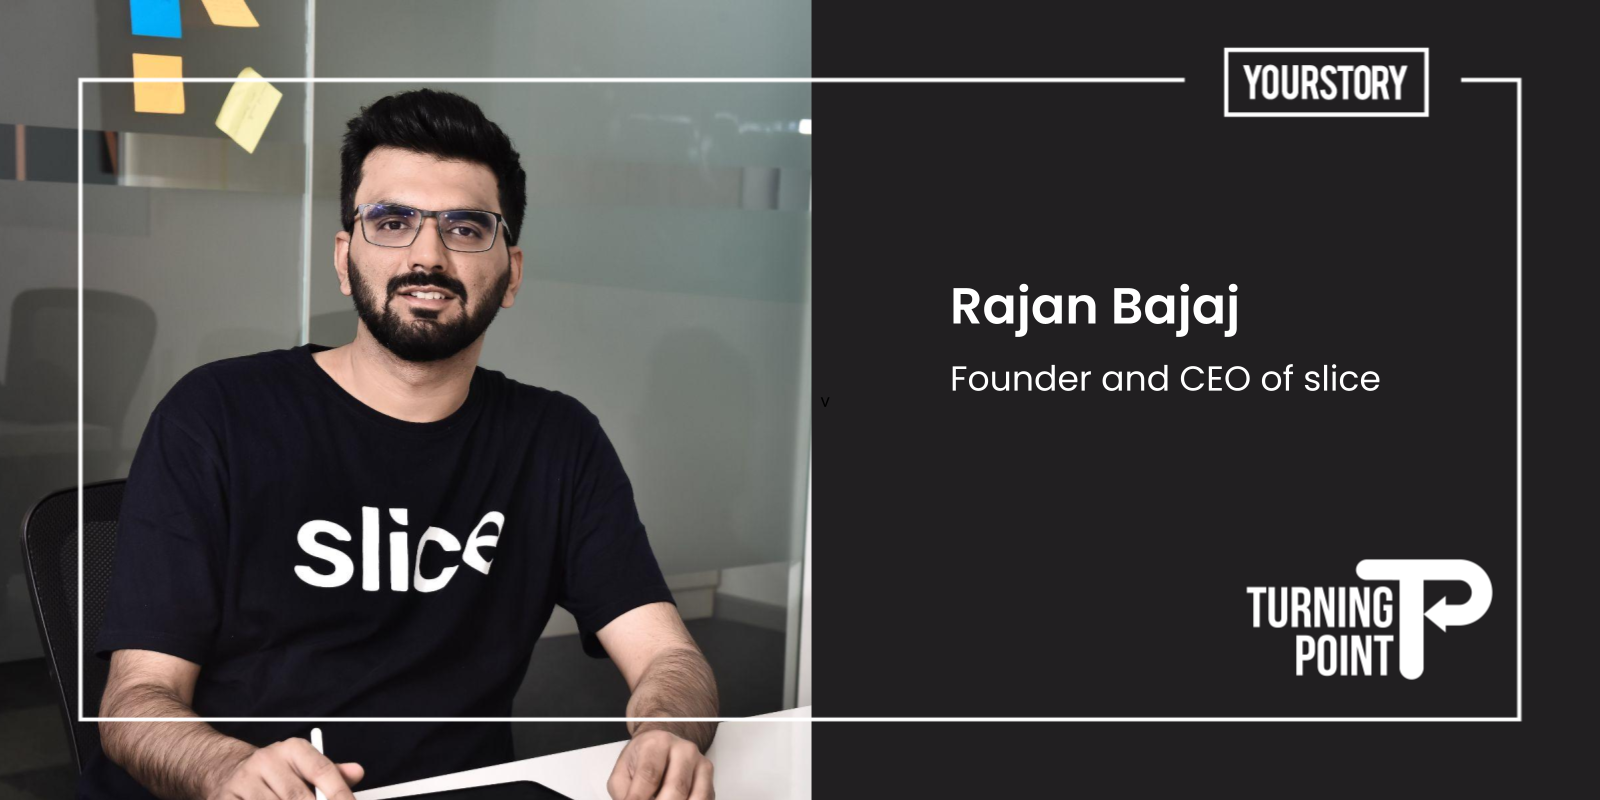 [The Turning Point] How slice founder Rajan Bajaj got inspired by Airbnb to plunge into entrepreneurship 